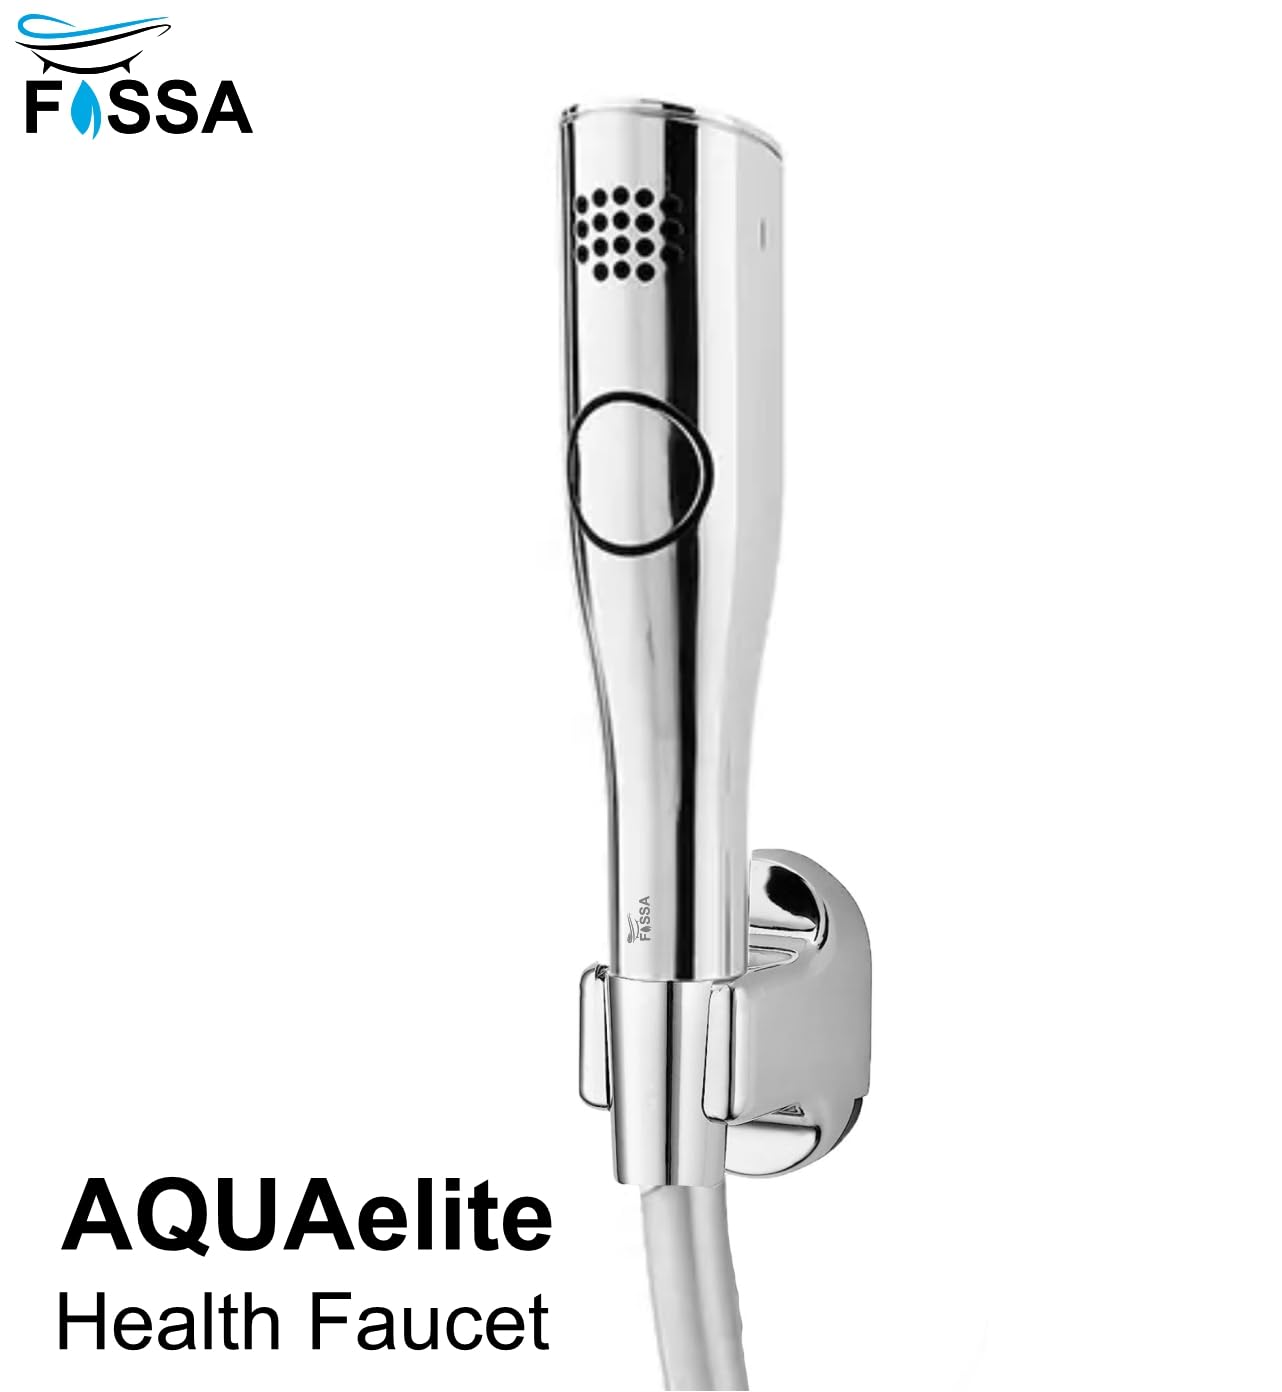 Fossa AQUAelite Heath Faucet Handheld Bidet Sprayer for Toilet, Cloth Diaper Sprayer for Toilet, Health Faucet with 1 Mtr Hose Pipe,Hook (Chrome Finish)